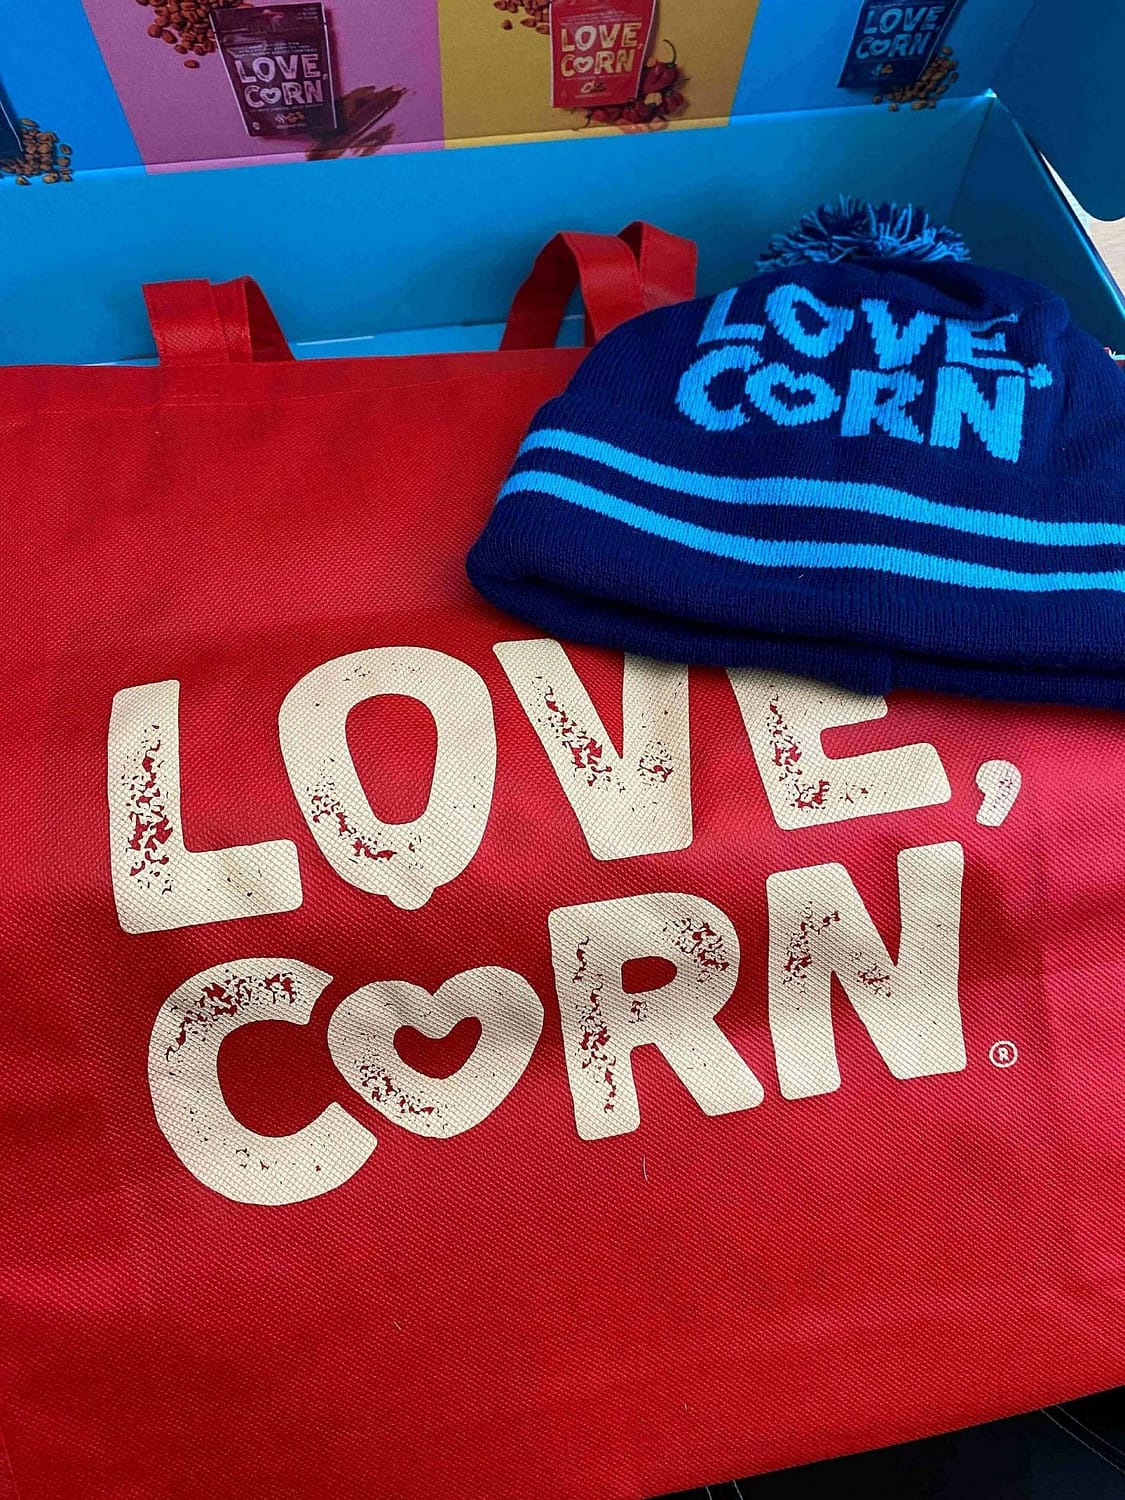 Love Corn Merchandise